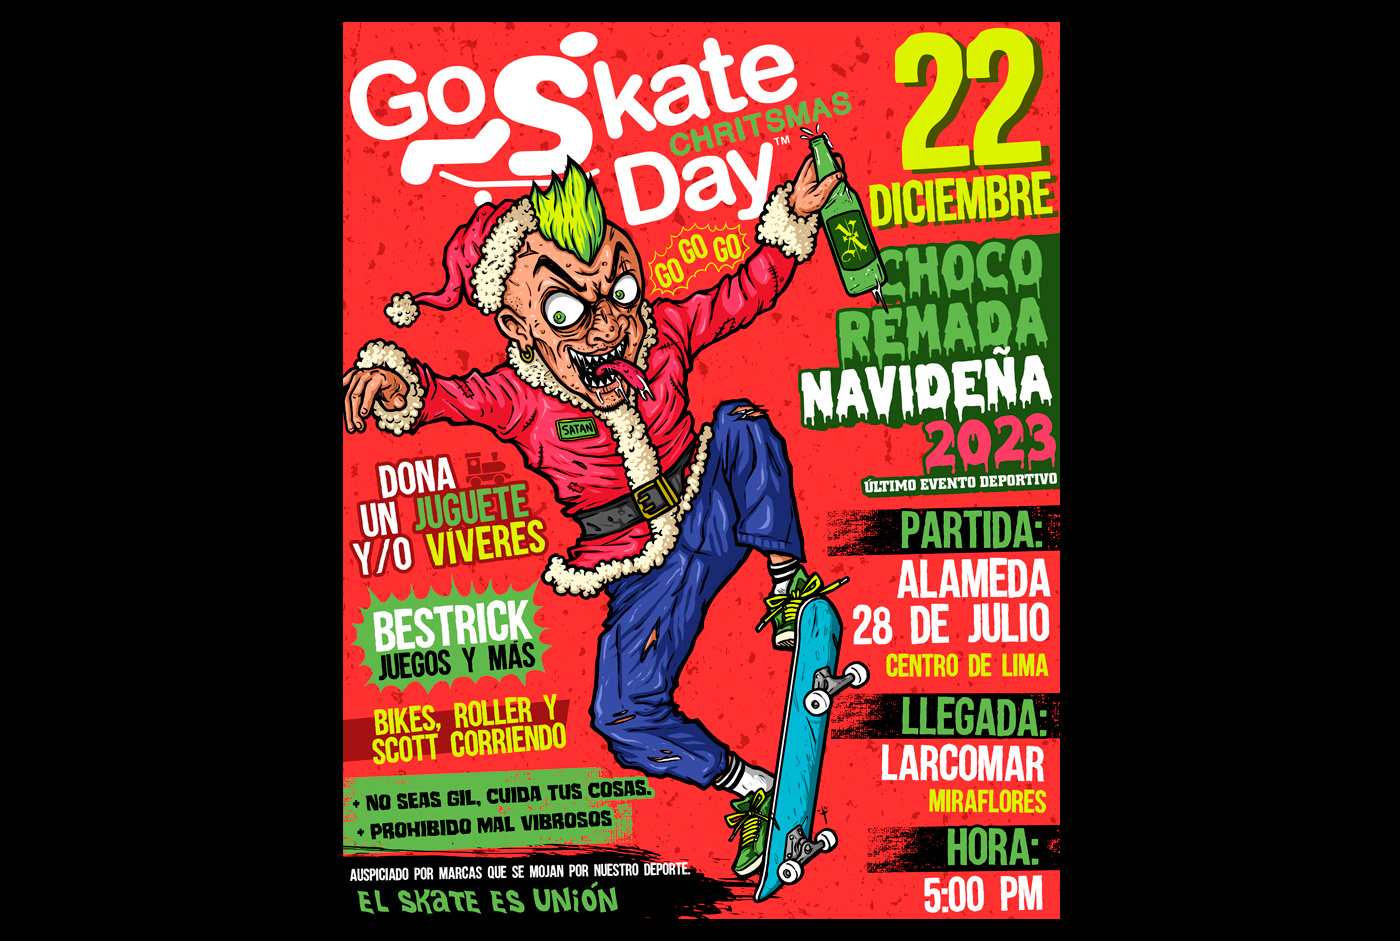 Merry Christmas punk navidad punk rock music skate skate life go skate day punk  rock skatboarding